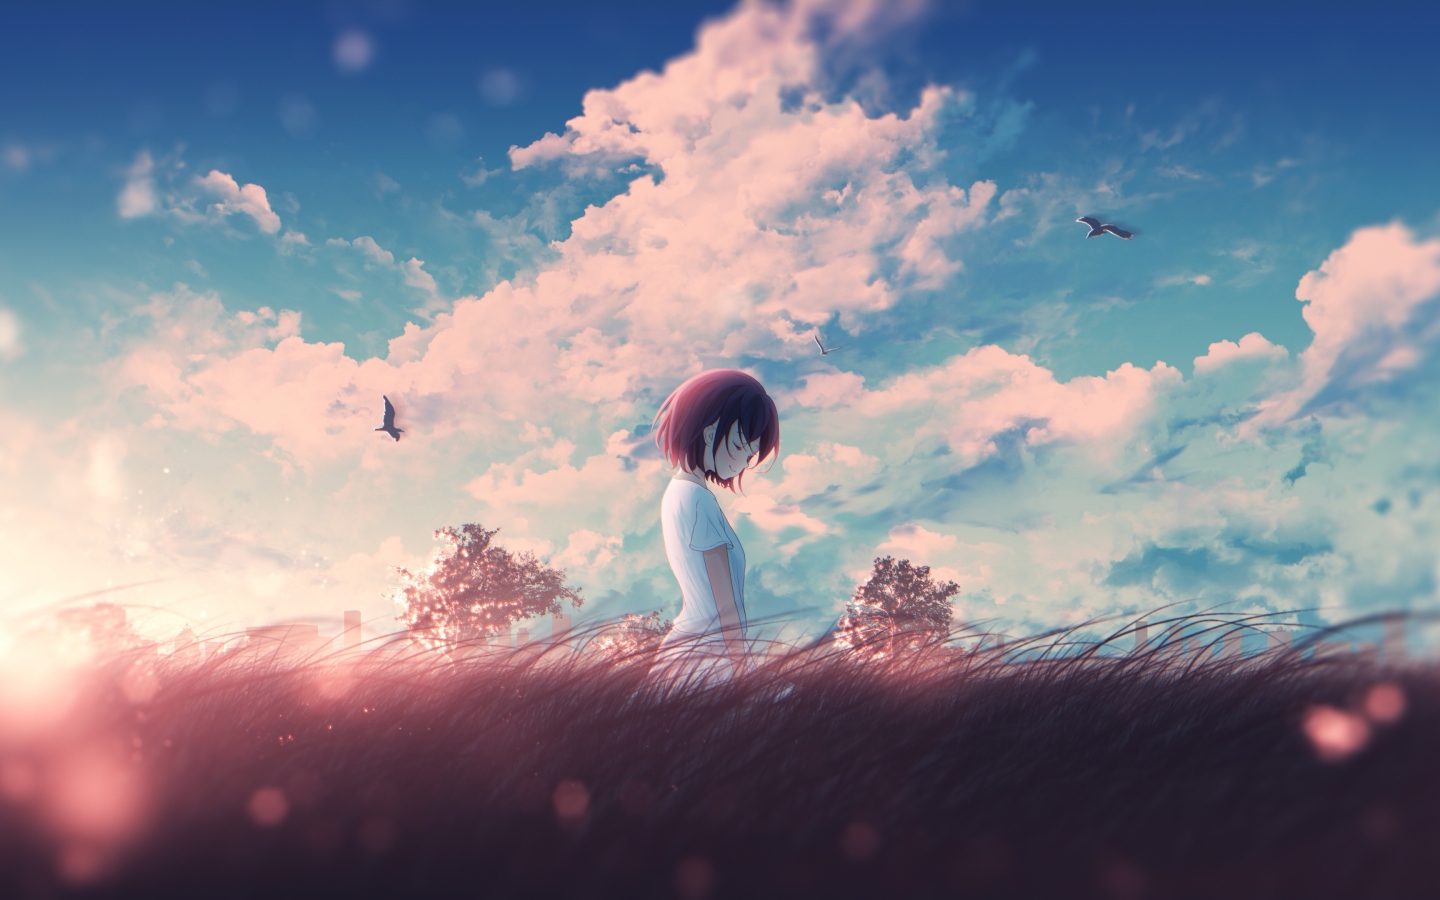 Wallpaper Anime Landscape, Mood, Sunlight, Field, Anime Girl, Relaxing, Clouds, Scenery:3840x2160